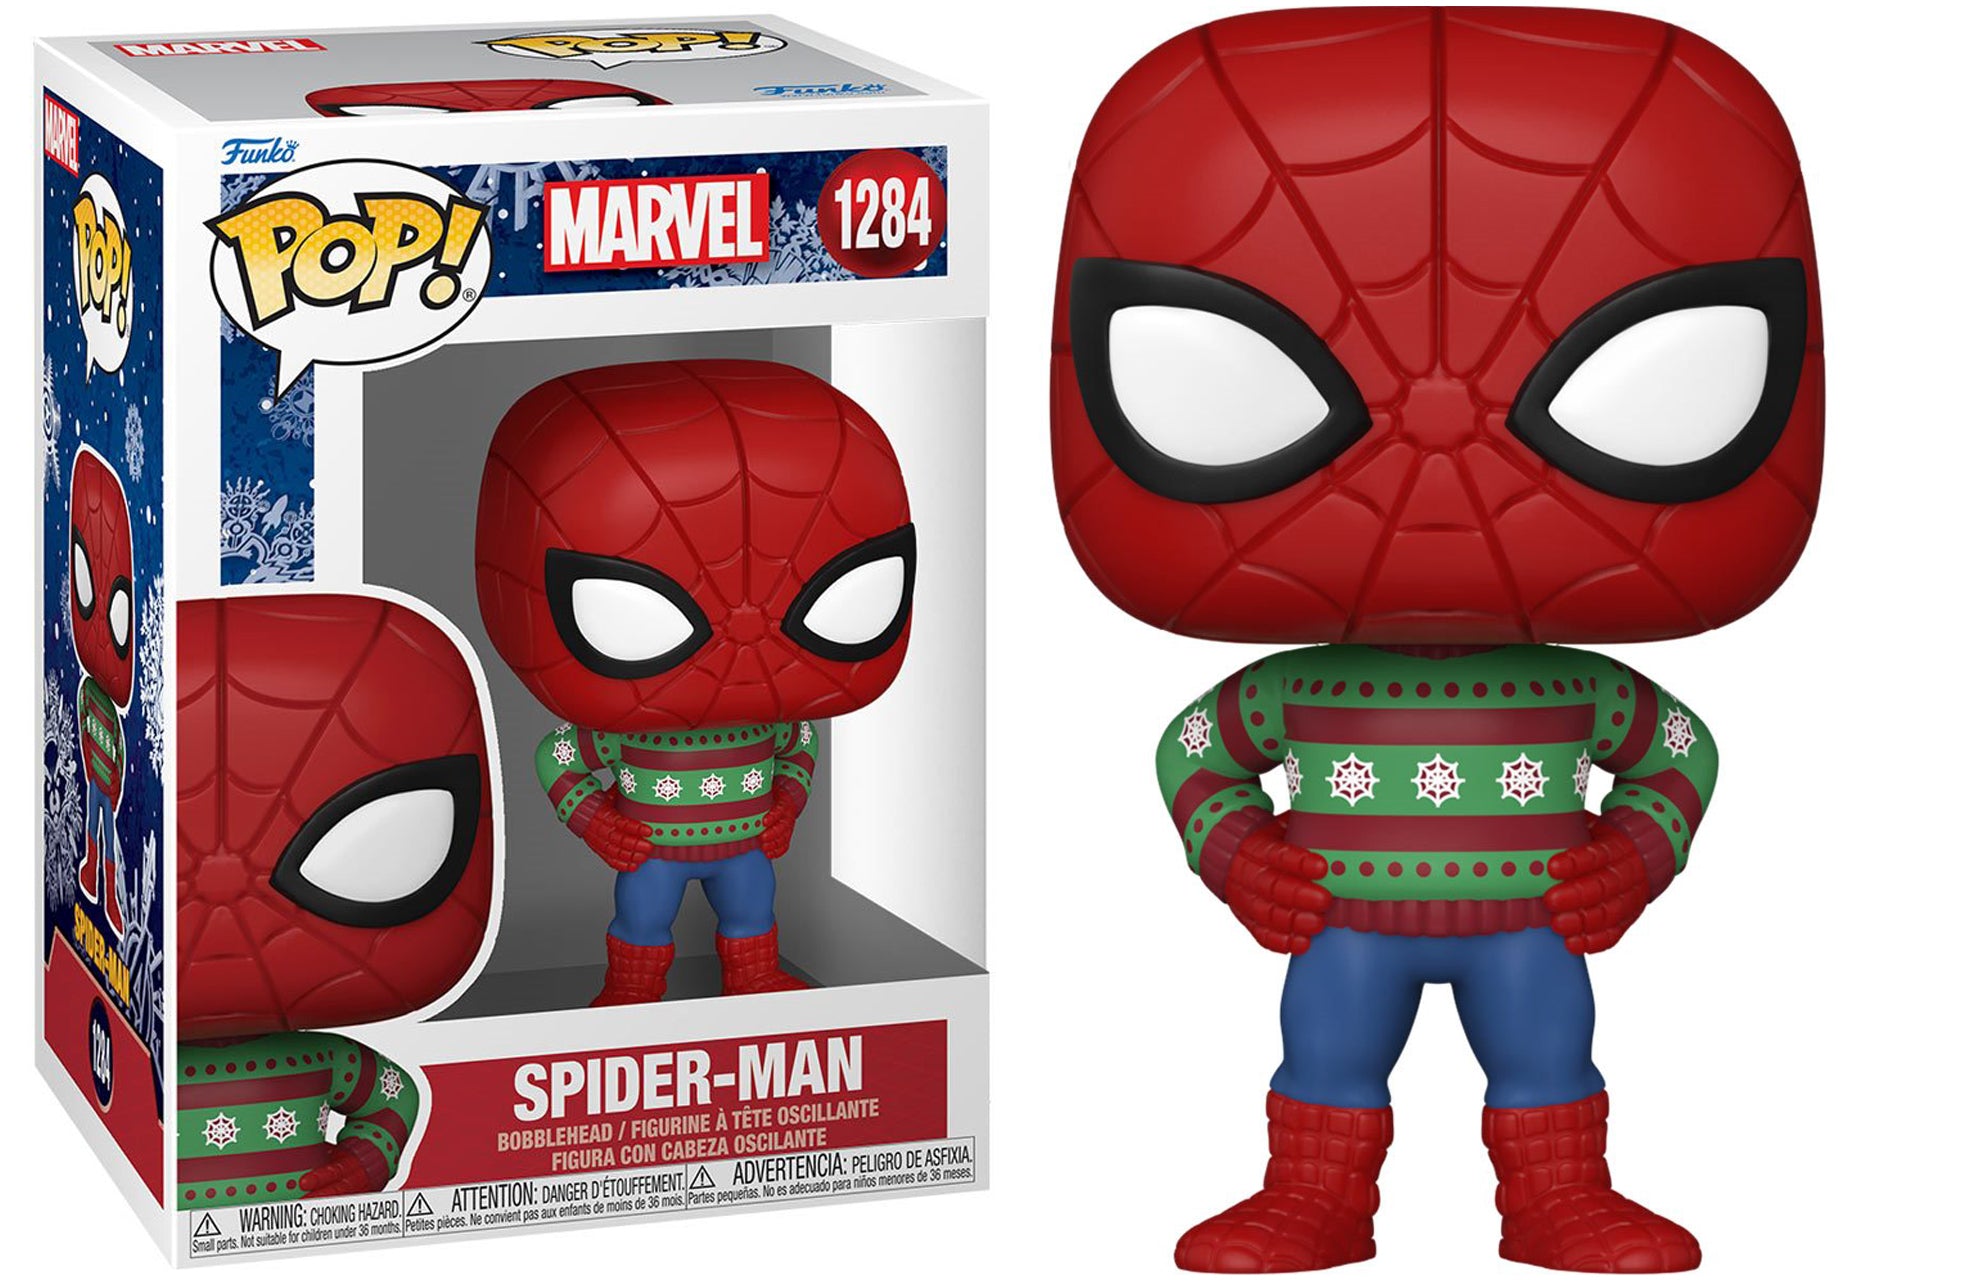 Spider-Man Miles Morales S.T.R.I.K.E. Suit Funko Pop #766 Bobble-Head Brand  New!